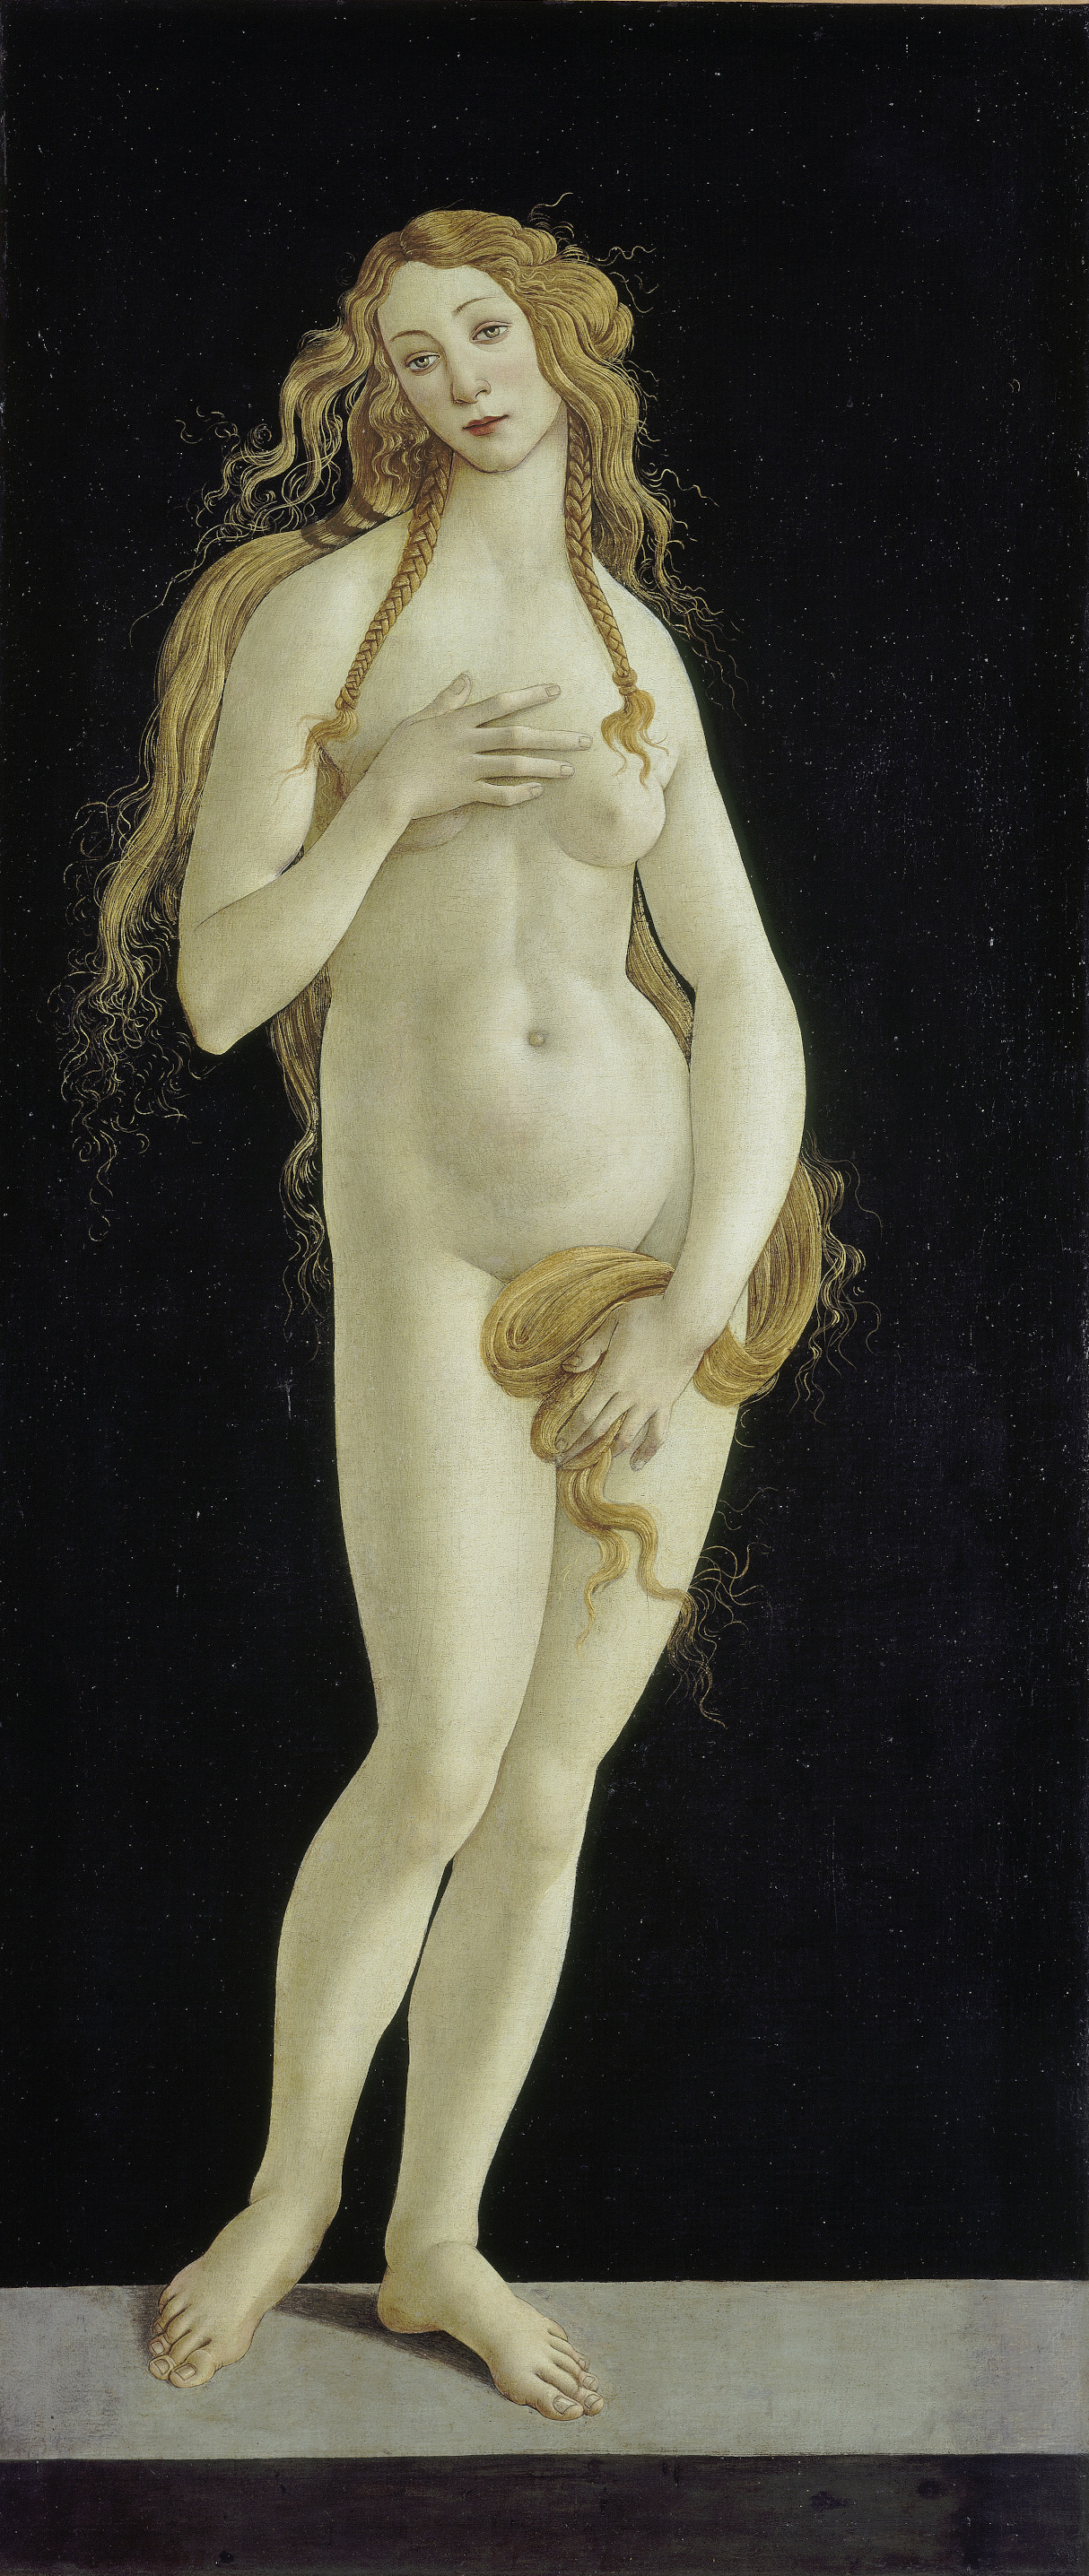 Venus by Sandro Botticelli (Workshop) - circa 1490 - 158.1 x 68.5 cm Gemäldegalerie